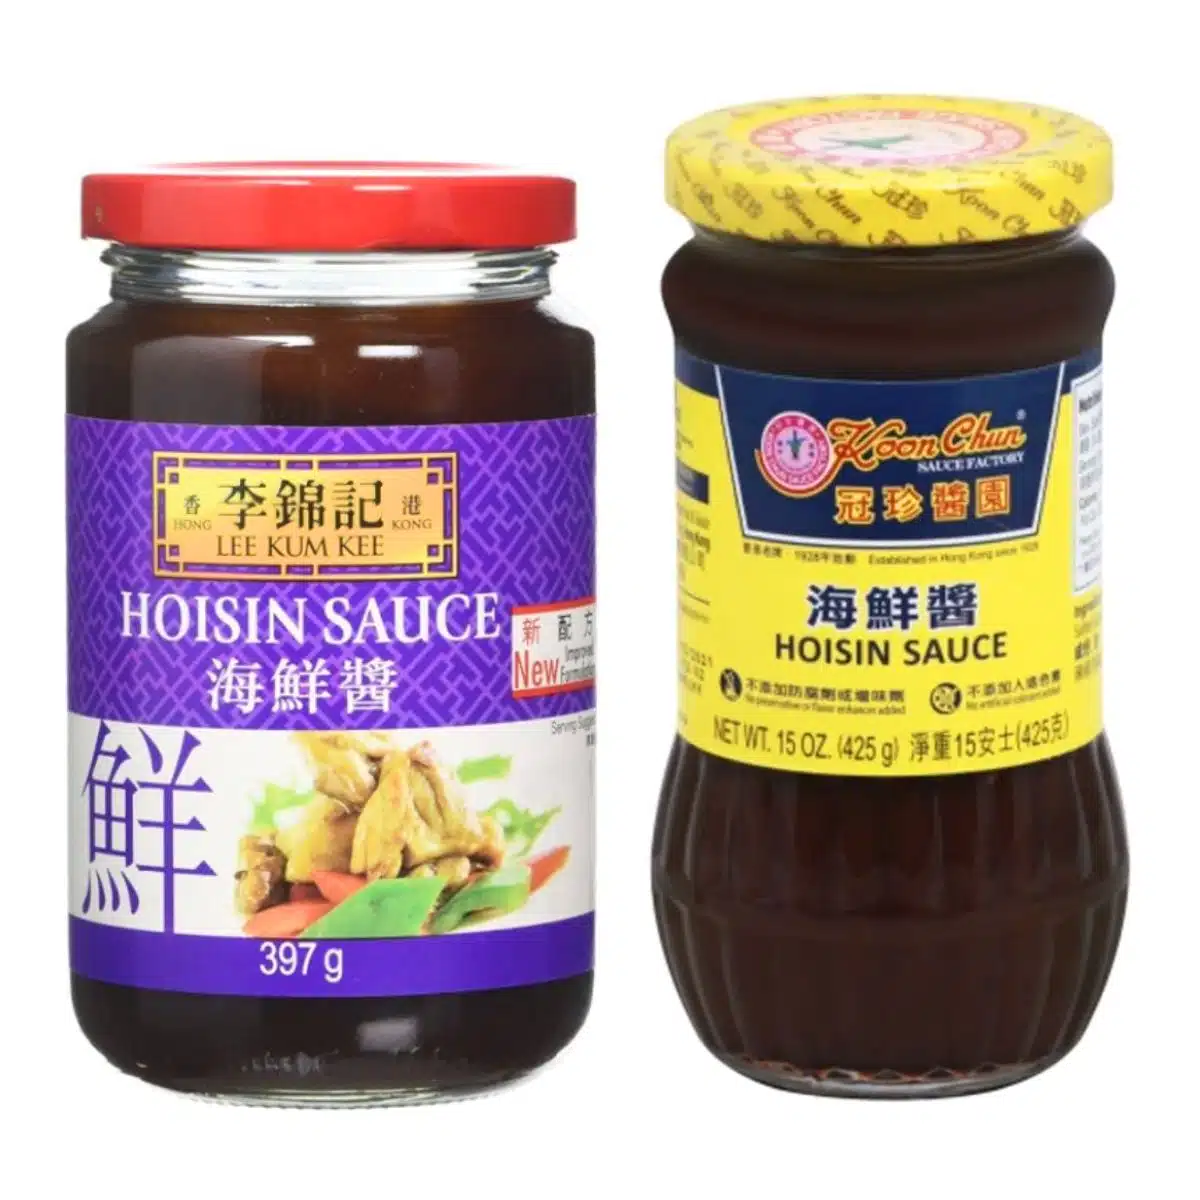 Two brands of hoisin Sauce, Koon Chun and Lee Kum Kee.